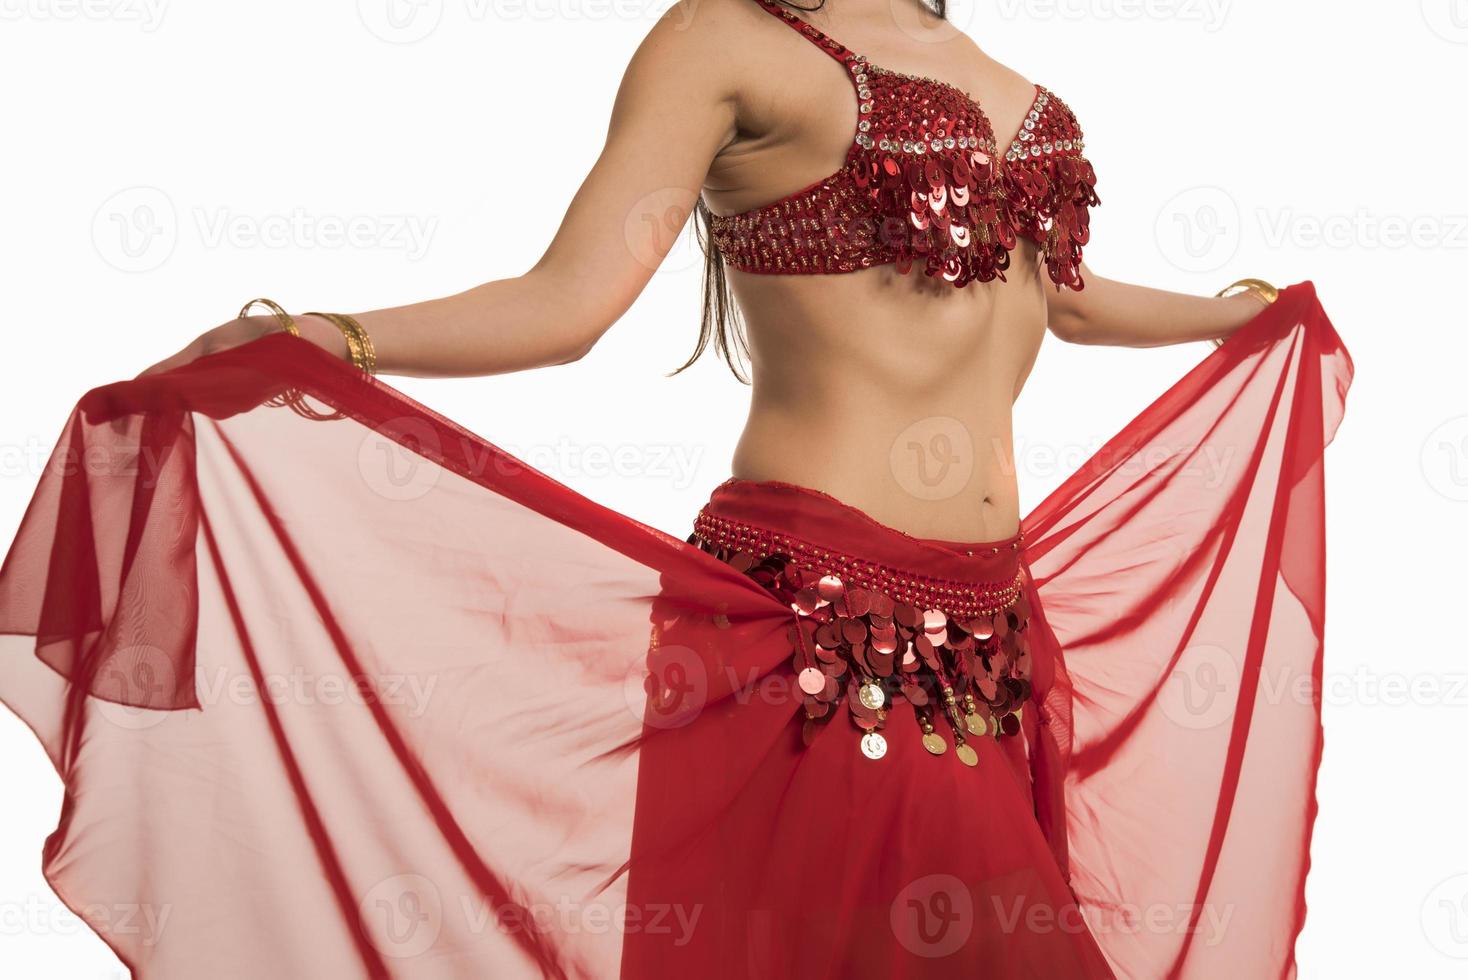 mooi buik danser jong vrouw in prachtig rood kostuum jurk foto